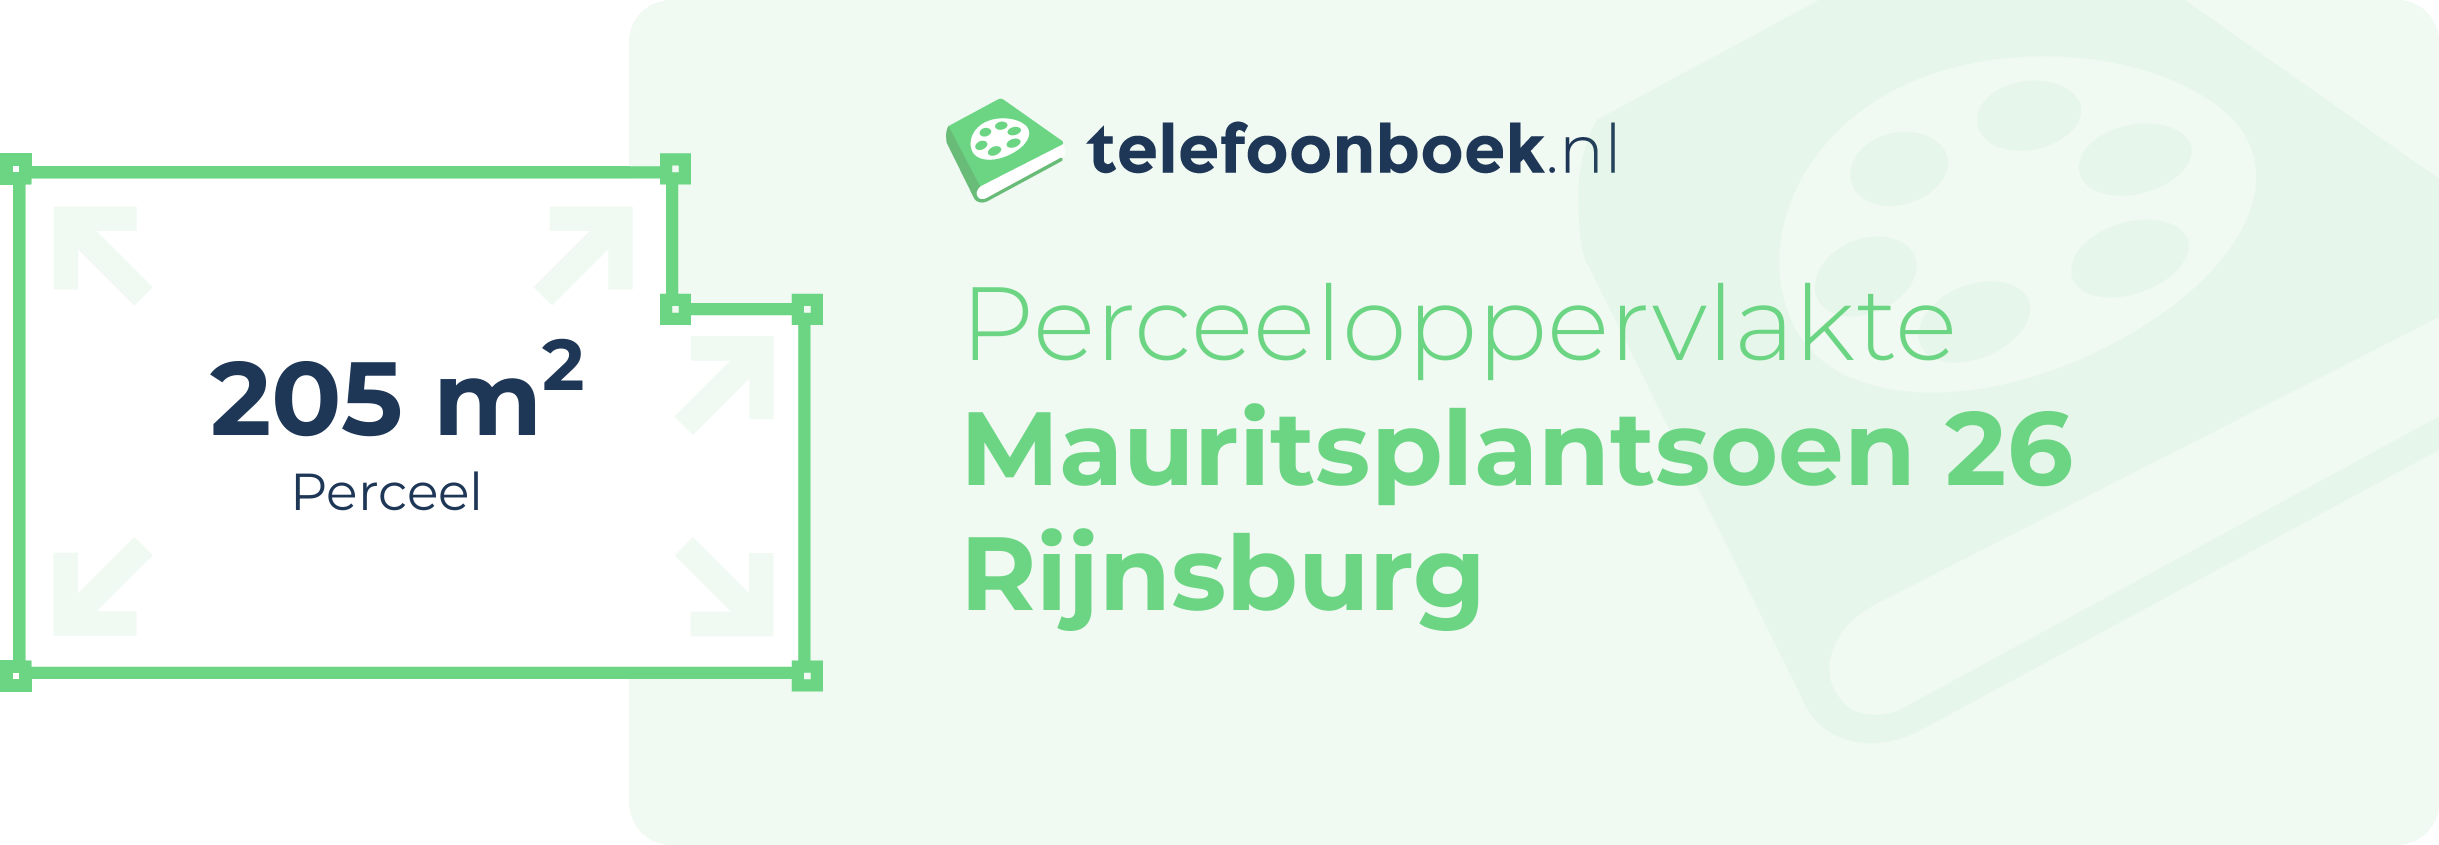 Perceeloppervlakte Mauritsplantsoen 26 Rijnsburg